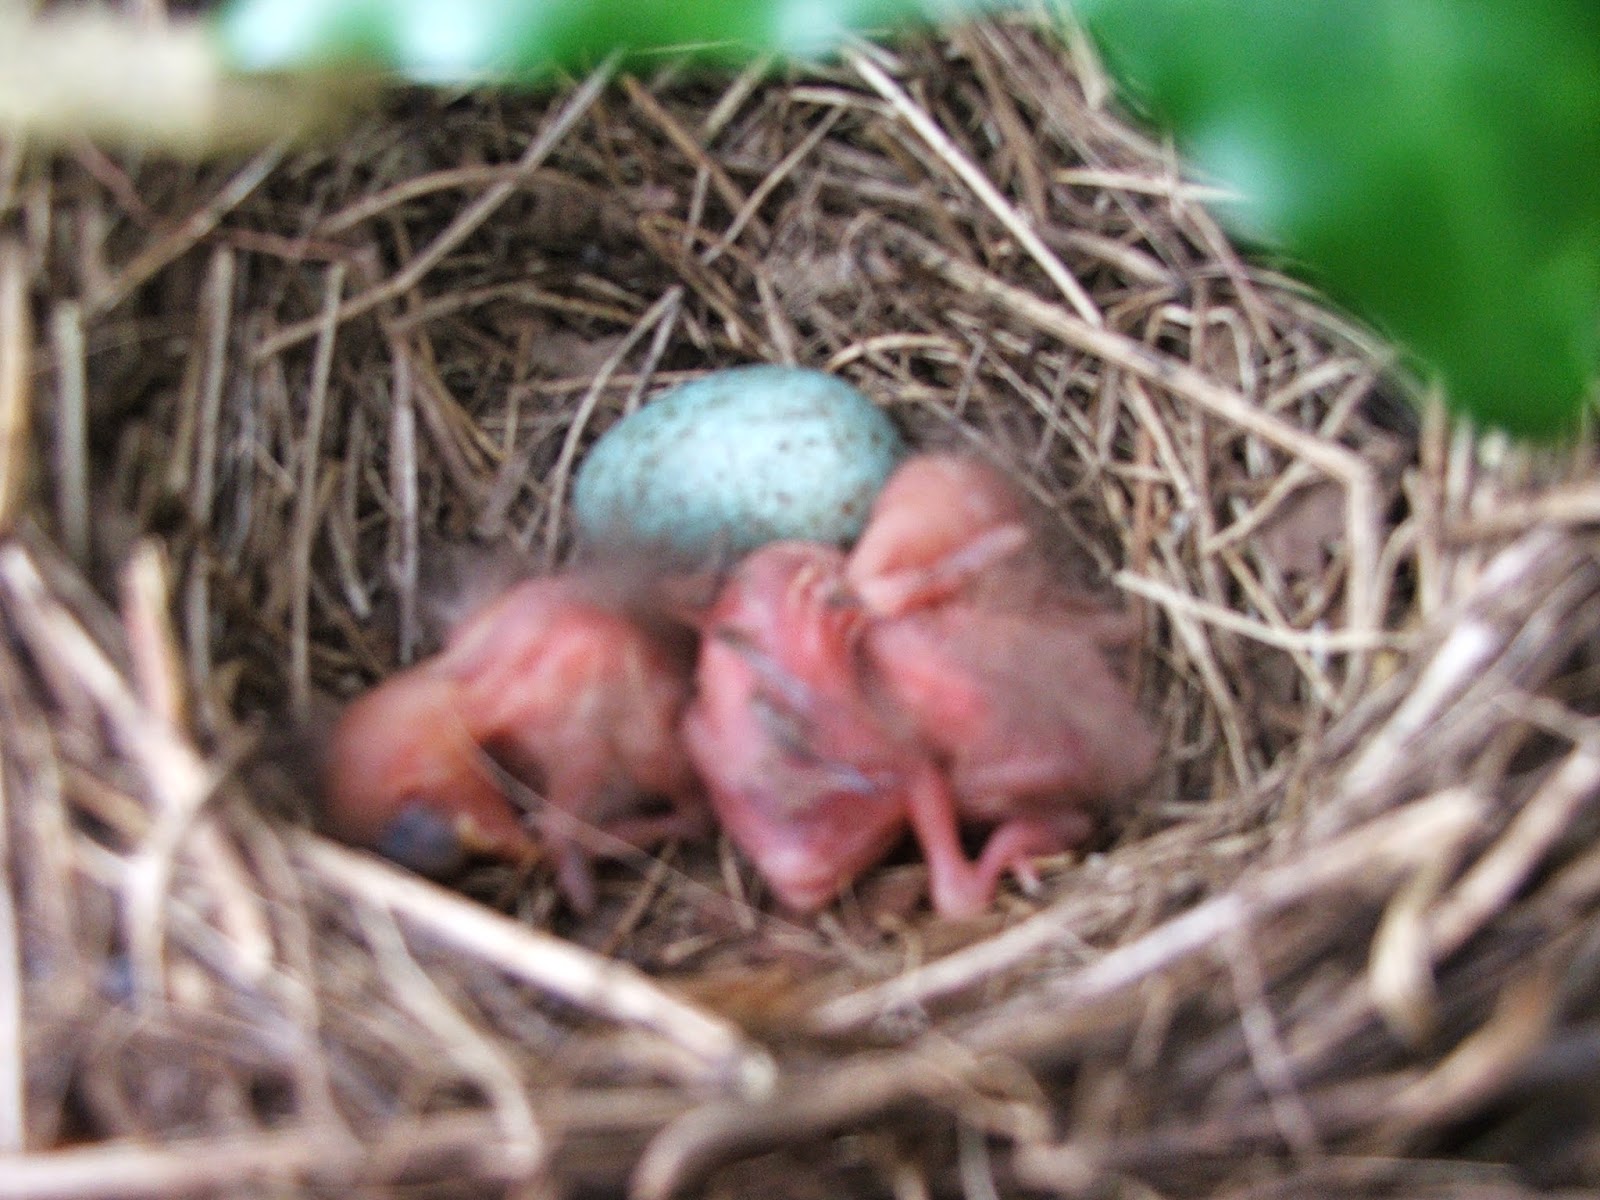 The Diary of a BTO nest recorder: Blackbird chicks